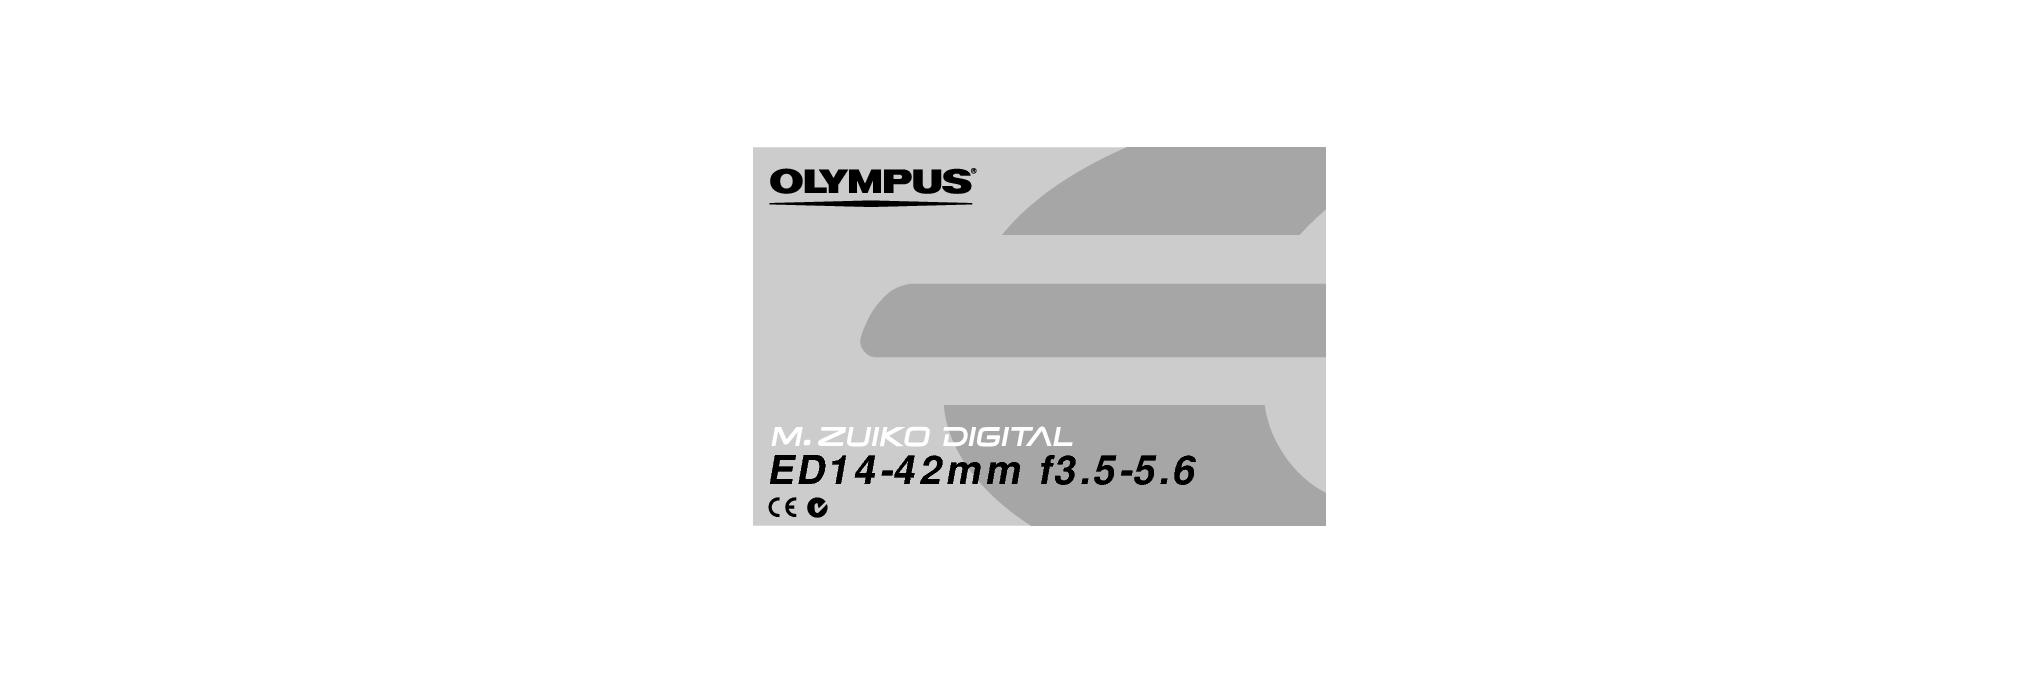 奥林巴斯 Olympus ED 14-42mm f3.5-5.6 使用说明书 封面